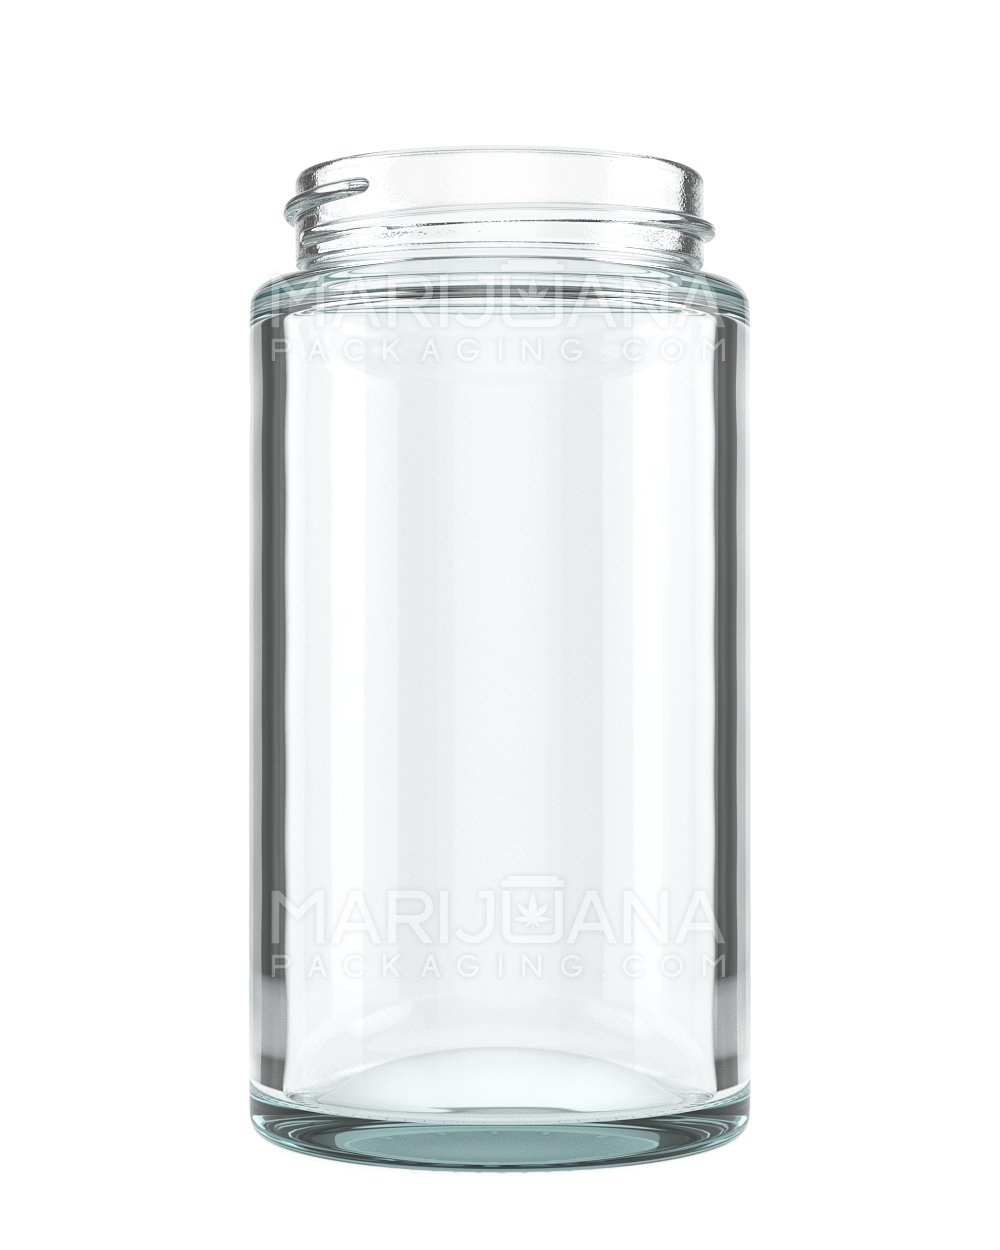  6 oz Clear Glass Jars